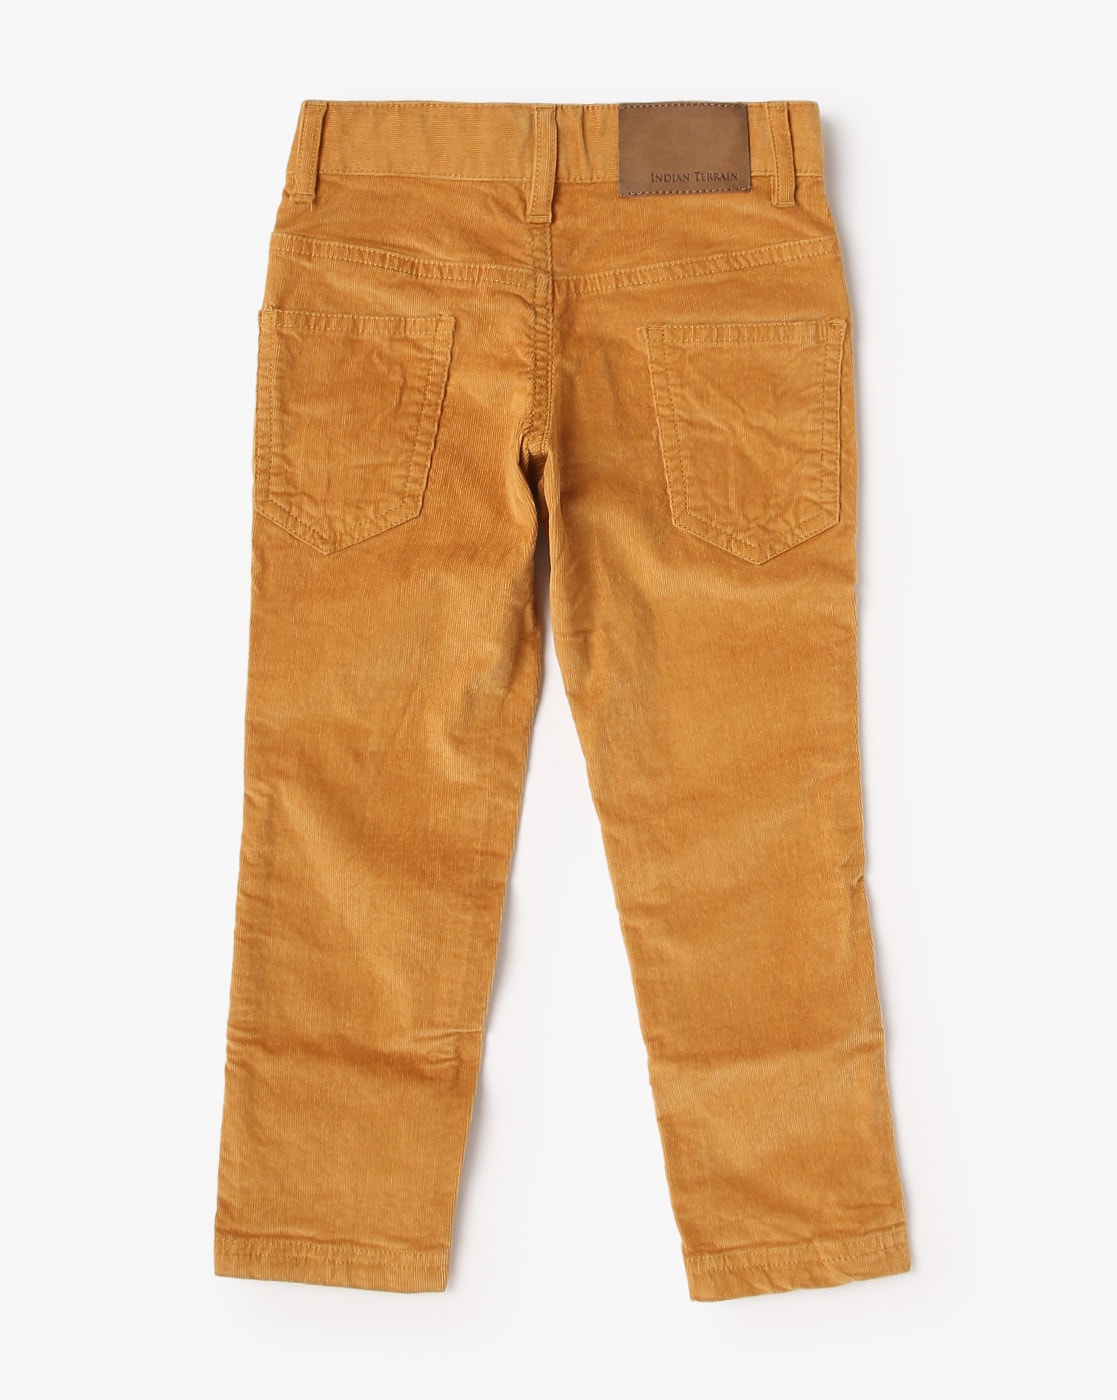 Indian Terrain cotton dark brown solid trouser - G3-MCT0720 | G3fashion.com